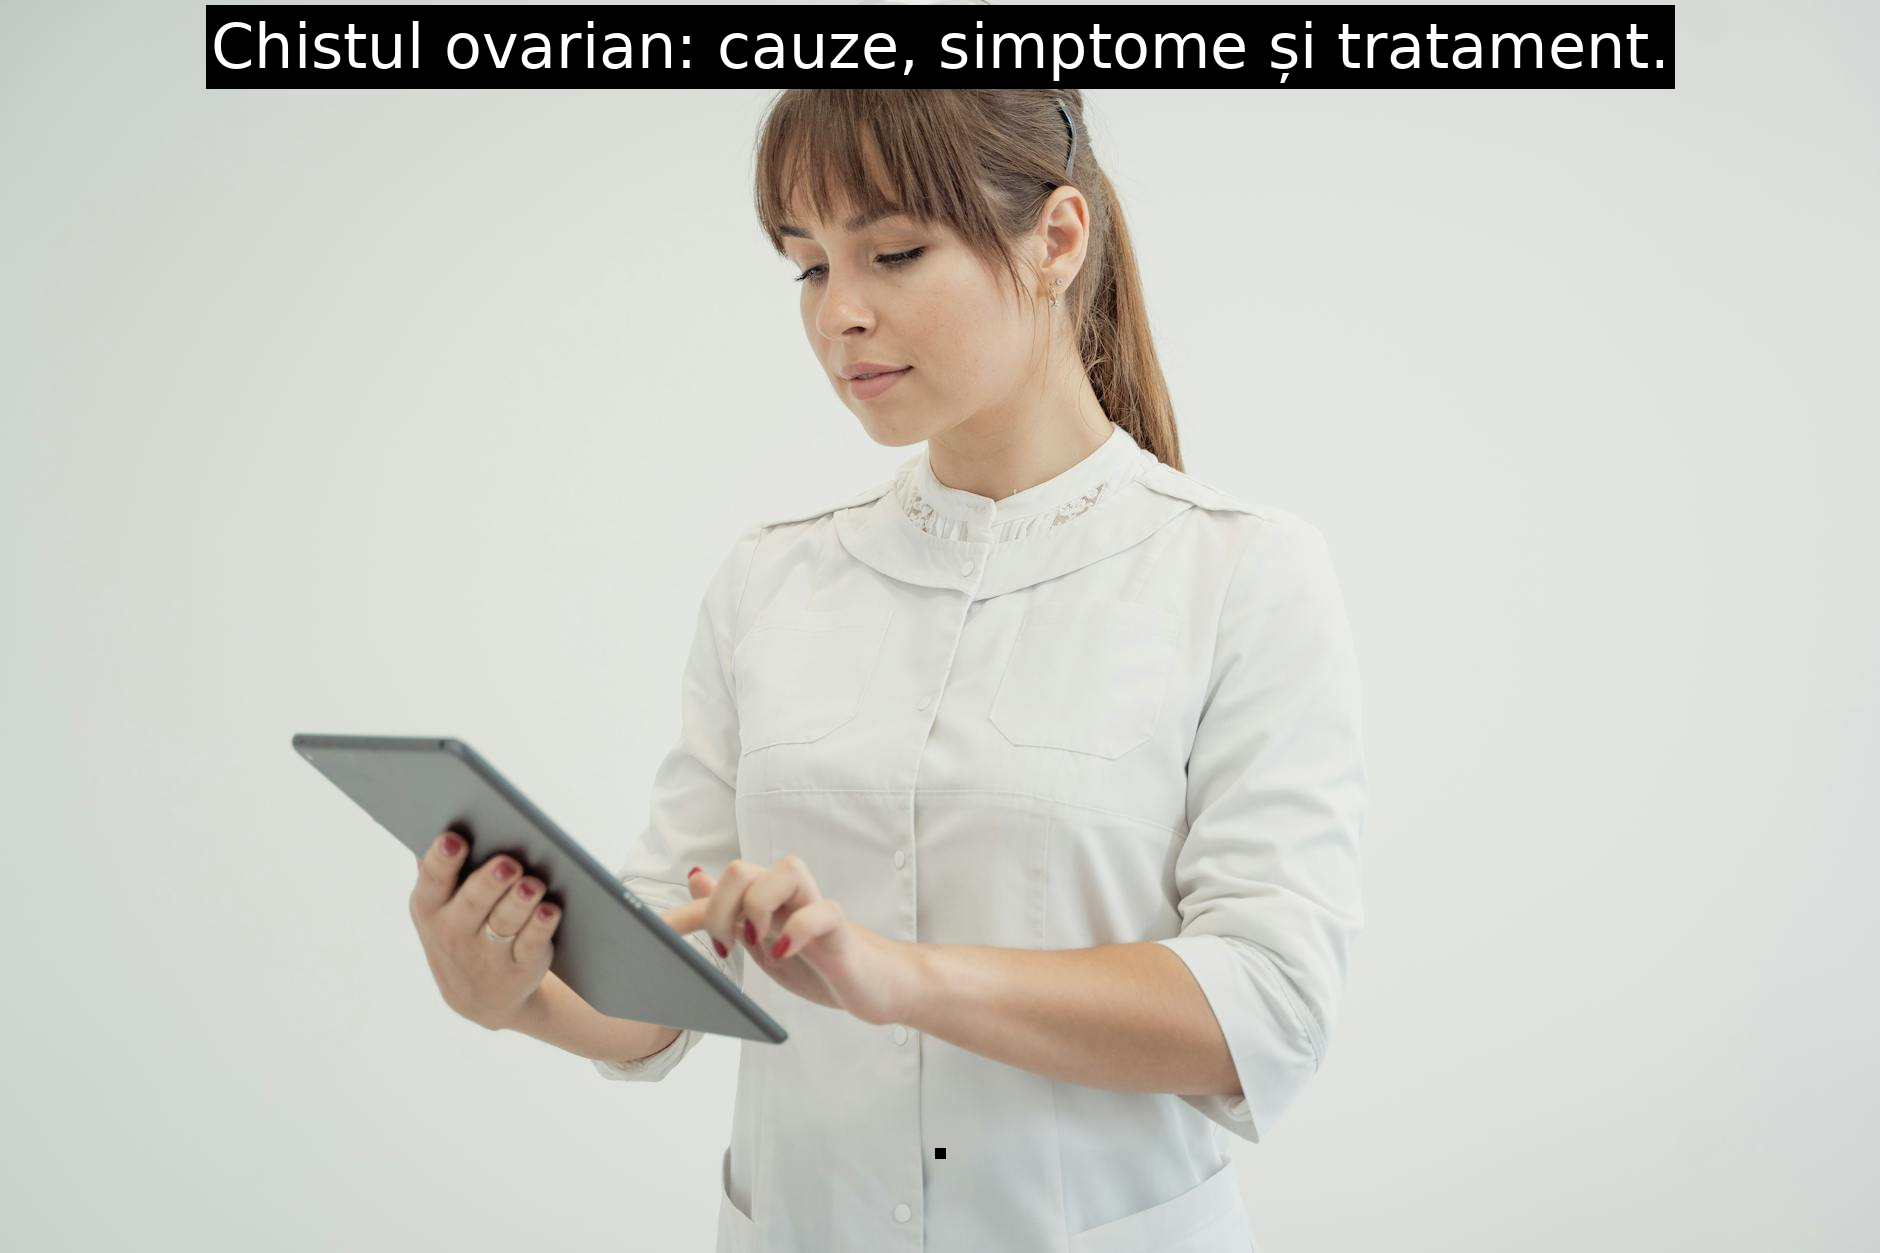 Chistul ovarian: cauze, simptome și tratament.